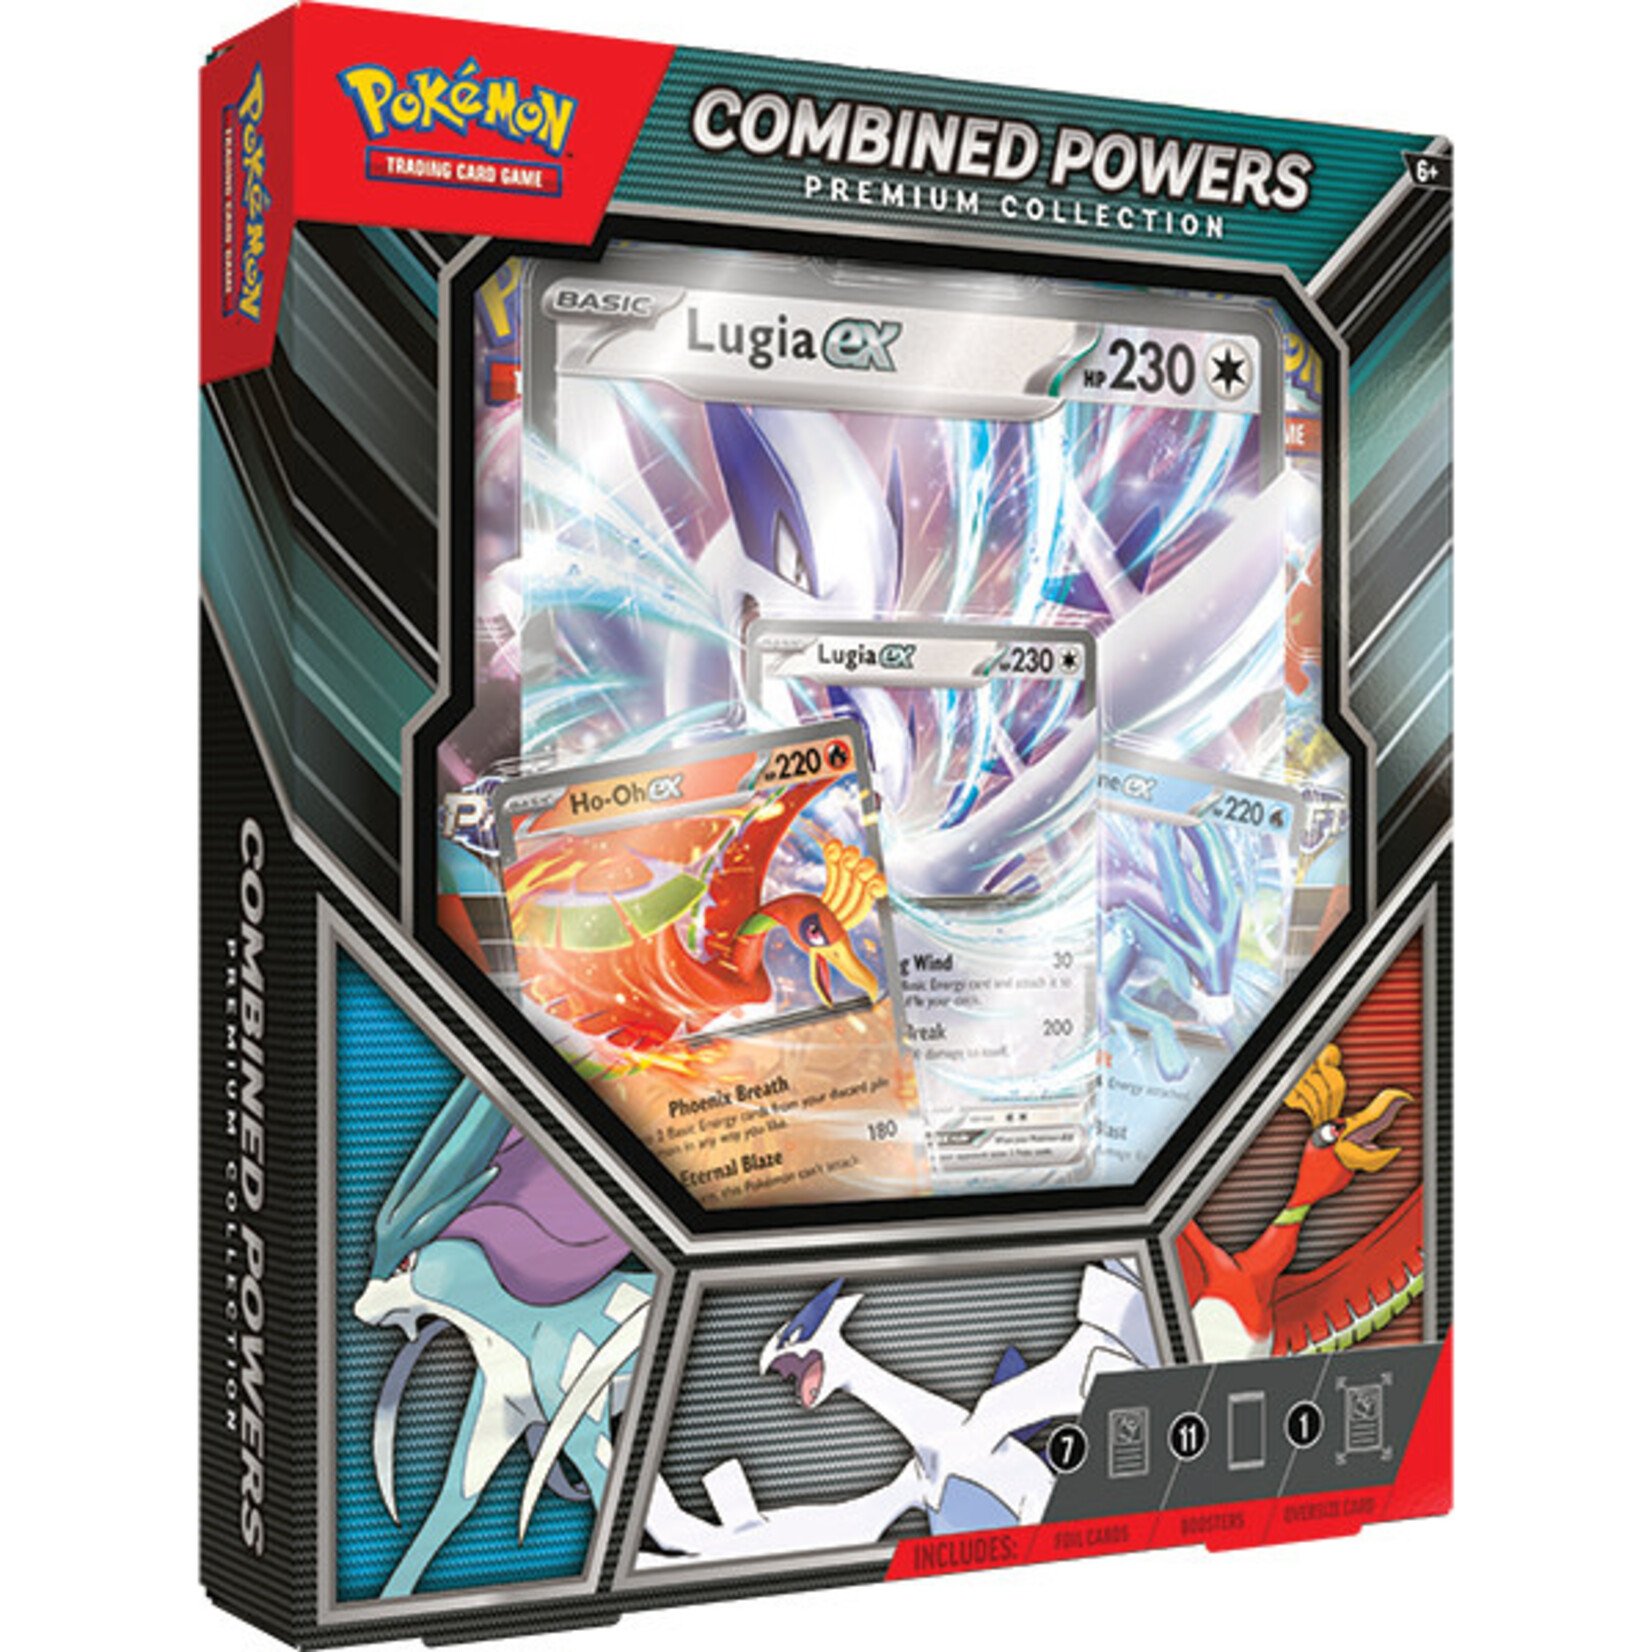 Pokémon Pokémon Trading Card Game: Combined Powers Premium Collection